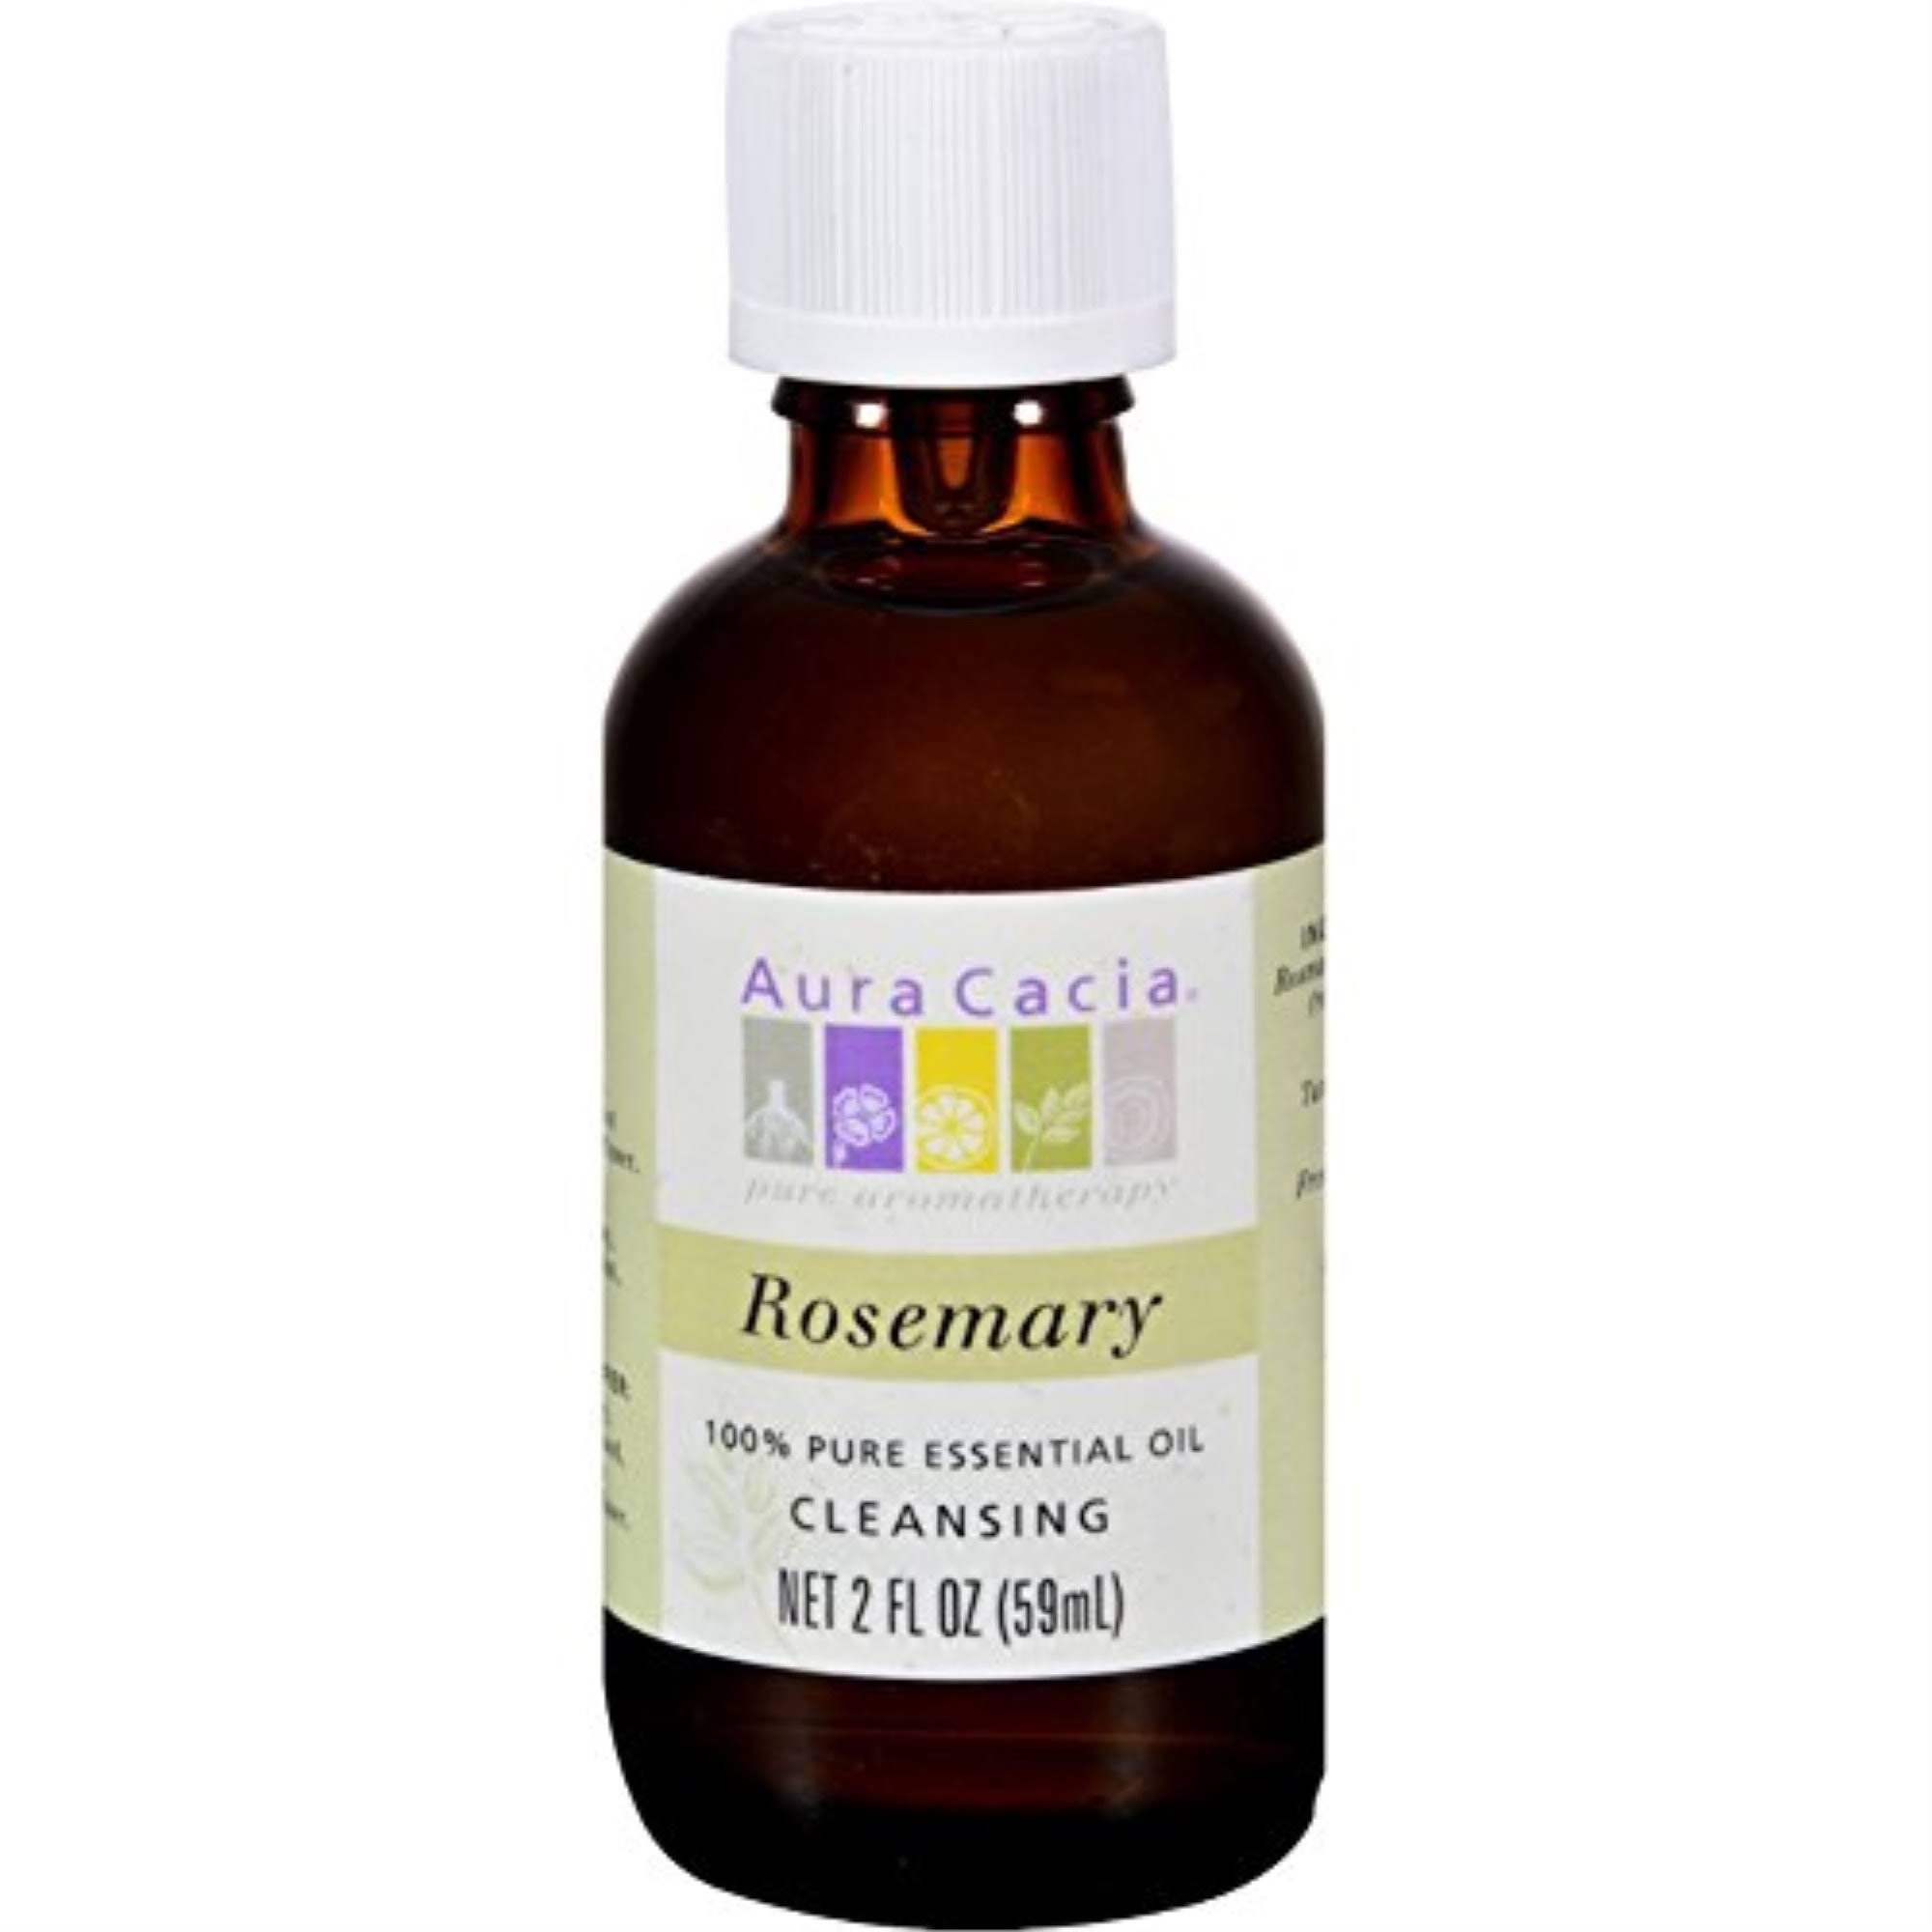 Aura Cacia 100 Percent Pure Essential Oil Rosemary Cleansing - 2oz